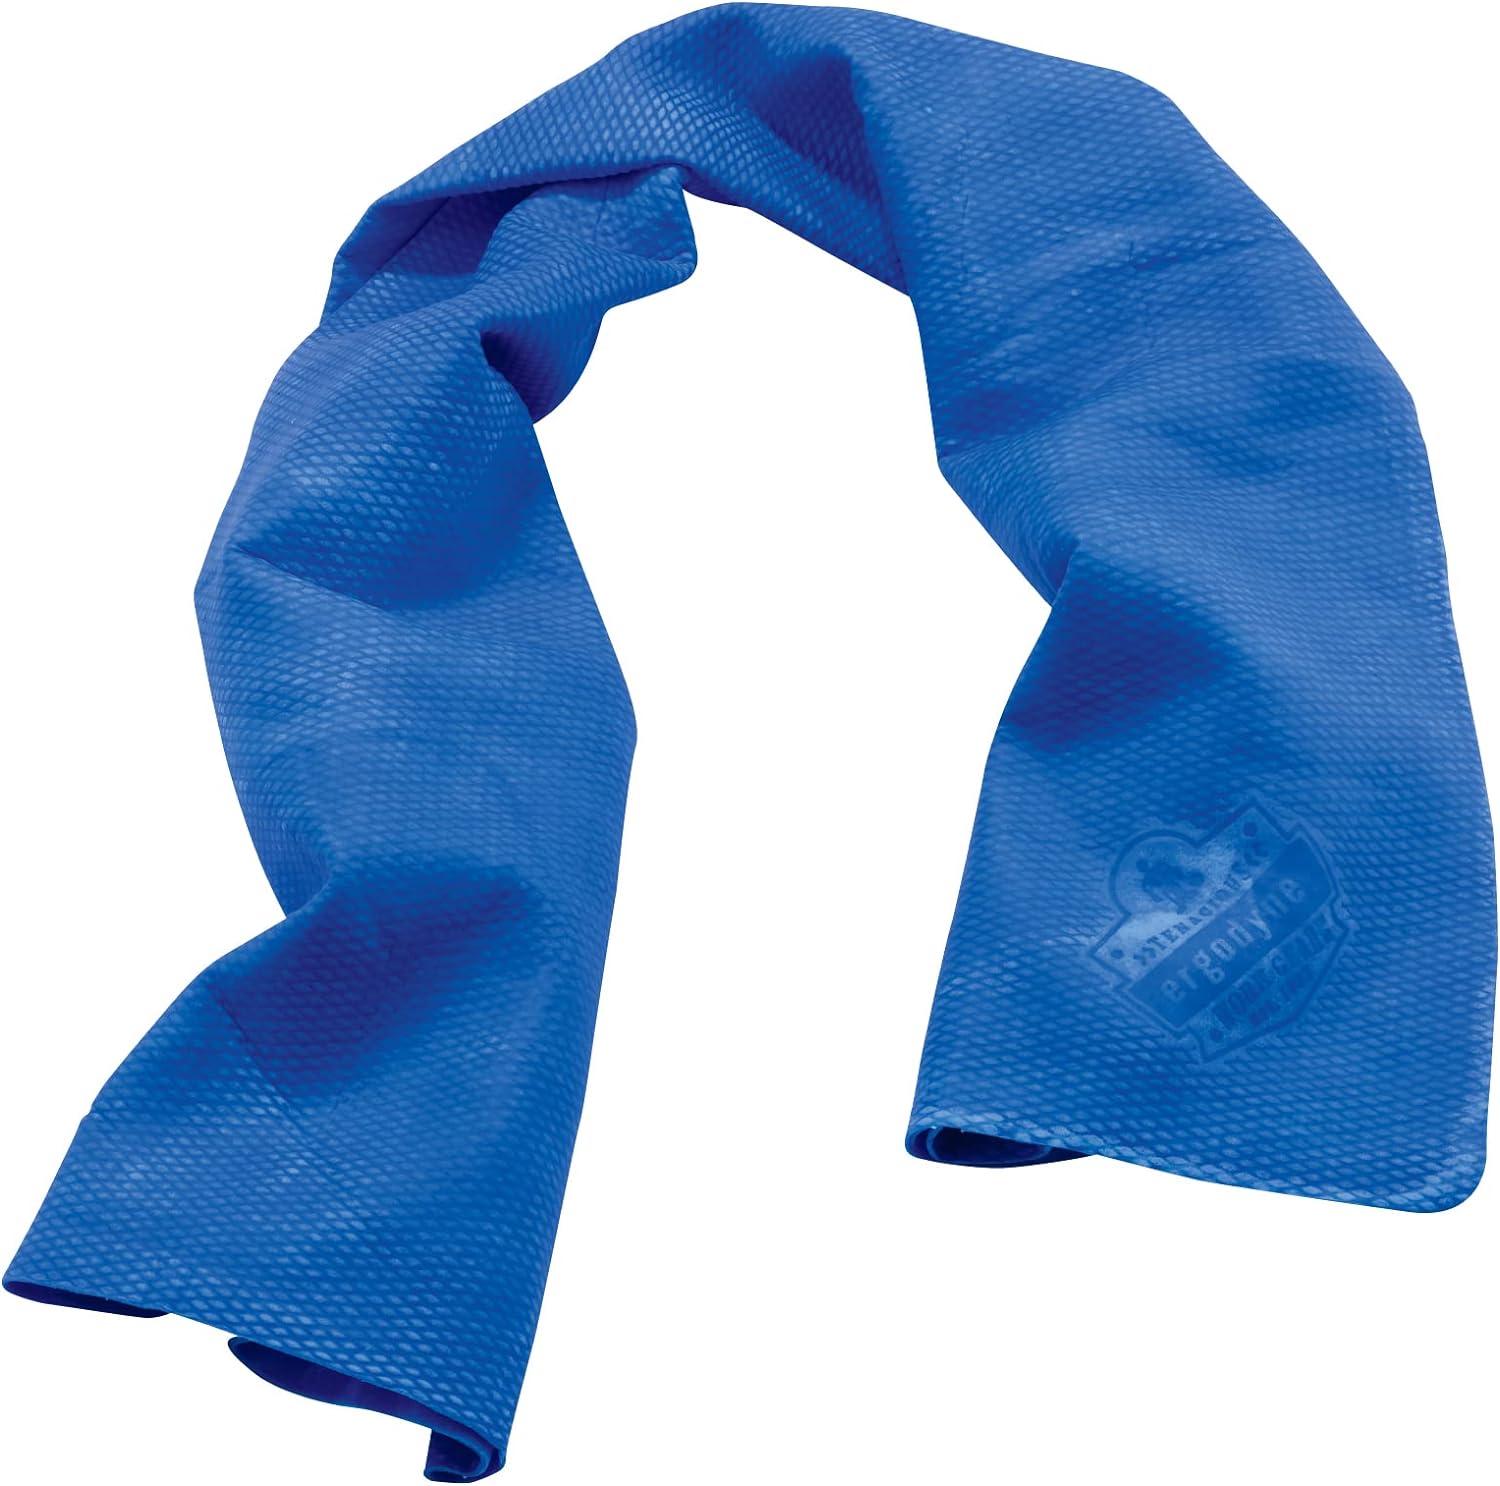 ERGODYNE Chill-Its 6602 Evaporative Cooling Towel, Blue